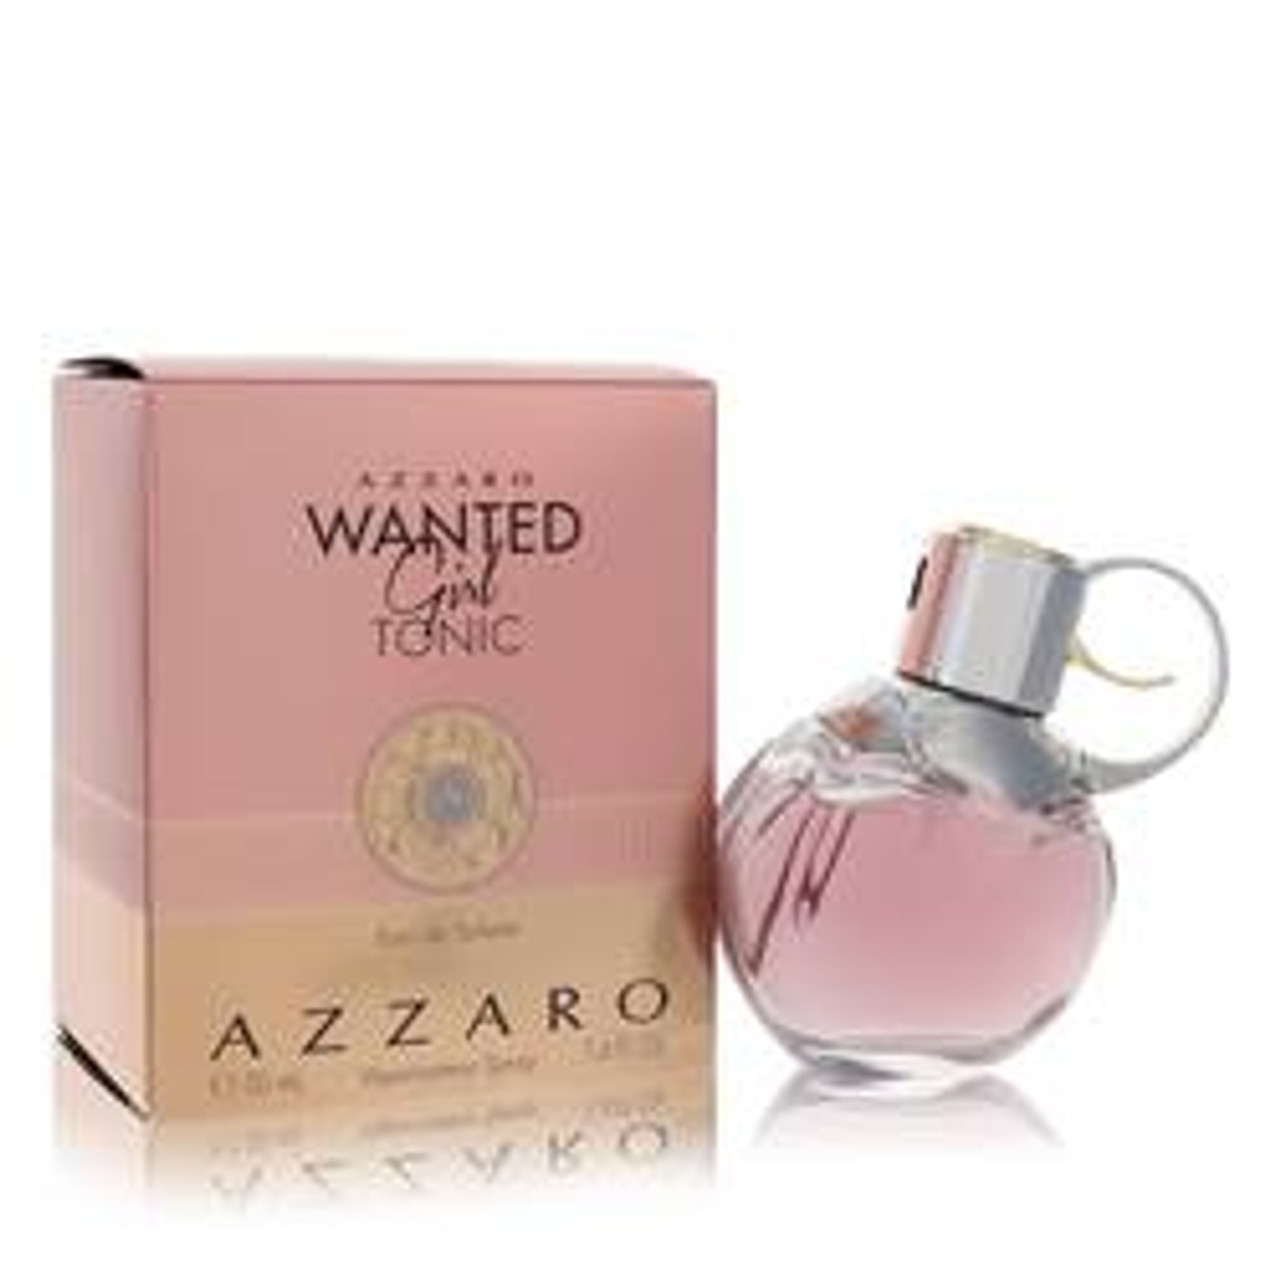 Azzaro Wanted Girl Tonic Perfume By Azzaro Eau De Toilette Spray 1.6 oz for Women - [From 67.00 - Choose pk Qty ] - *Ships from Miami